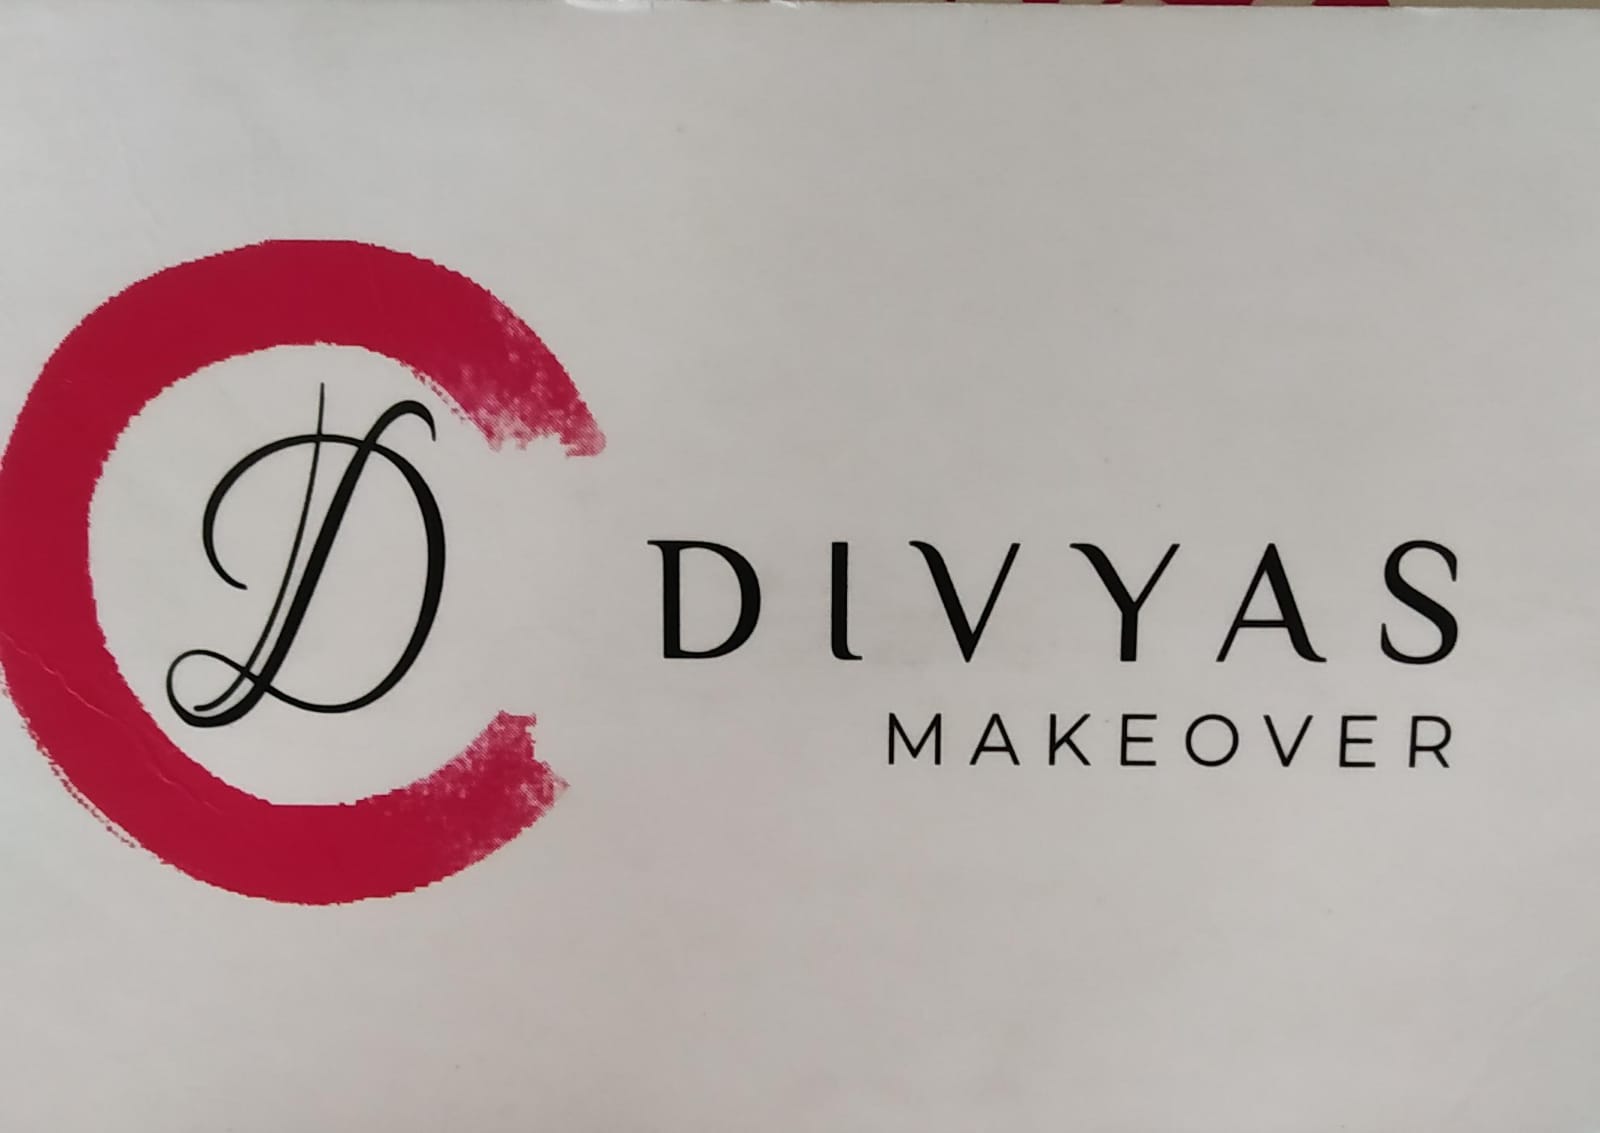 Divyas makeover, BEAUTY PARLOUR,  service in Fort Kochi, Ernakulam